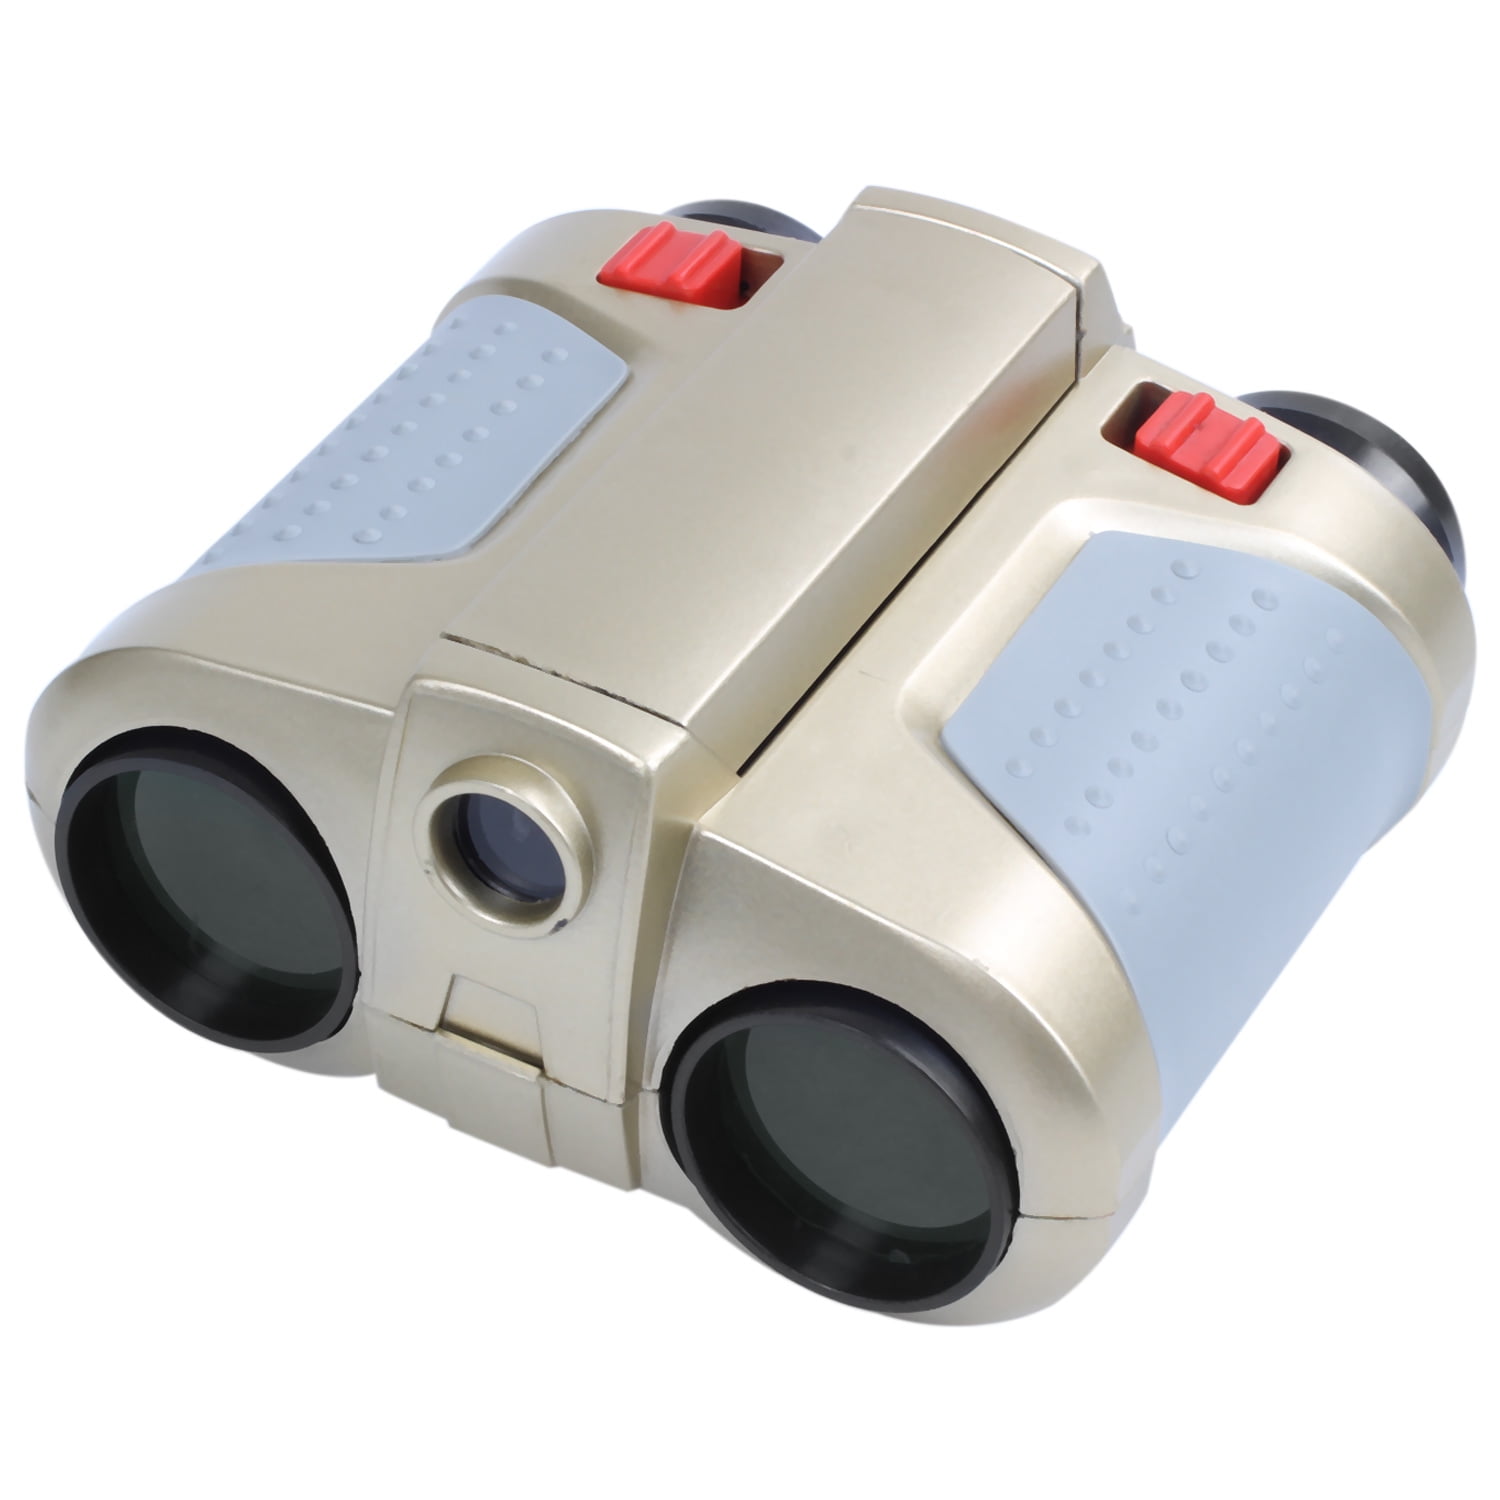 Kids Surveillance Scope Night Vision Telescope Binoculars Xmas Battery Gift US for sale online 